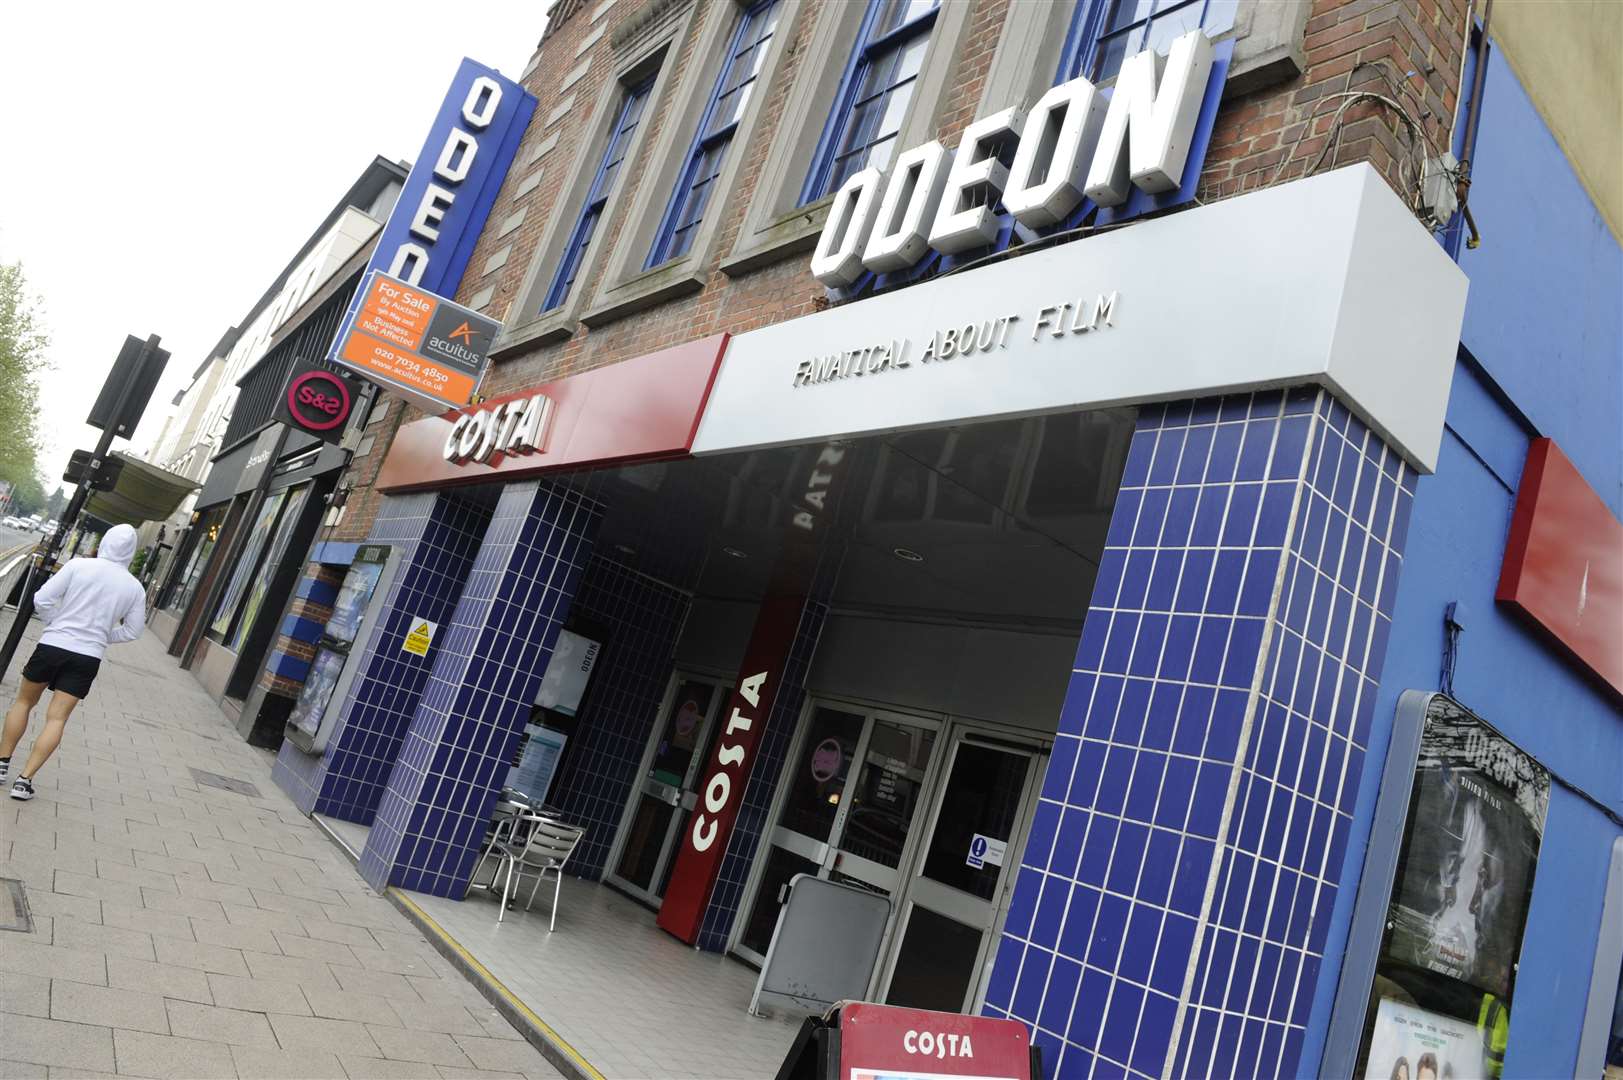 Odeon cinema in Canterbury will remain shut